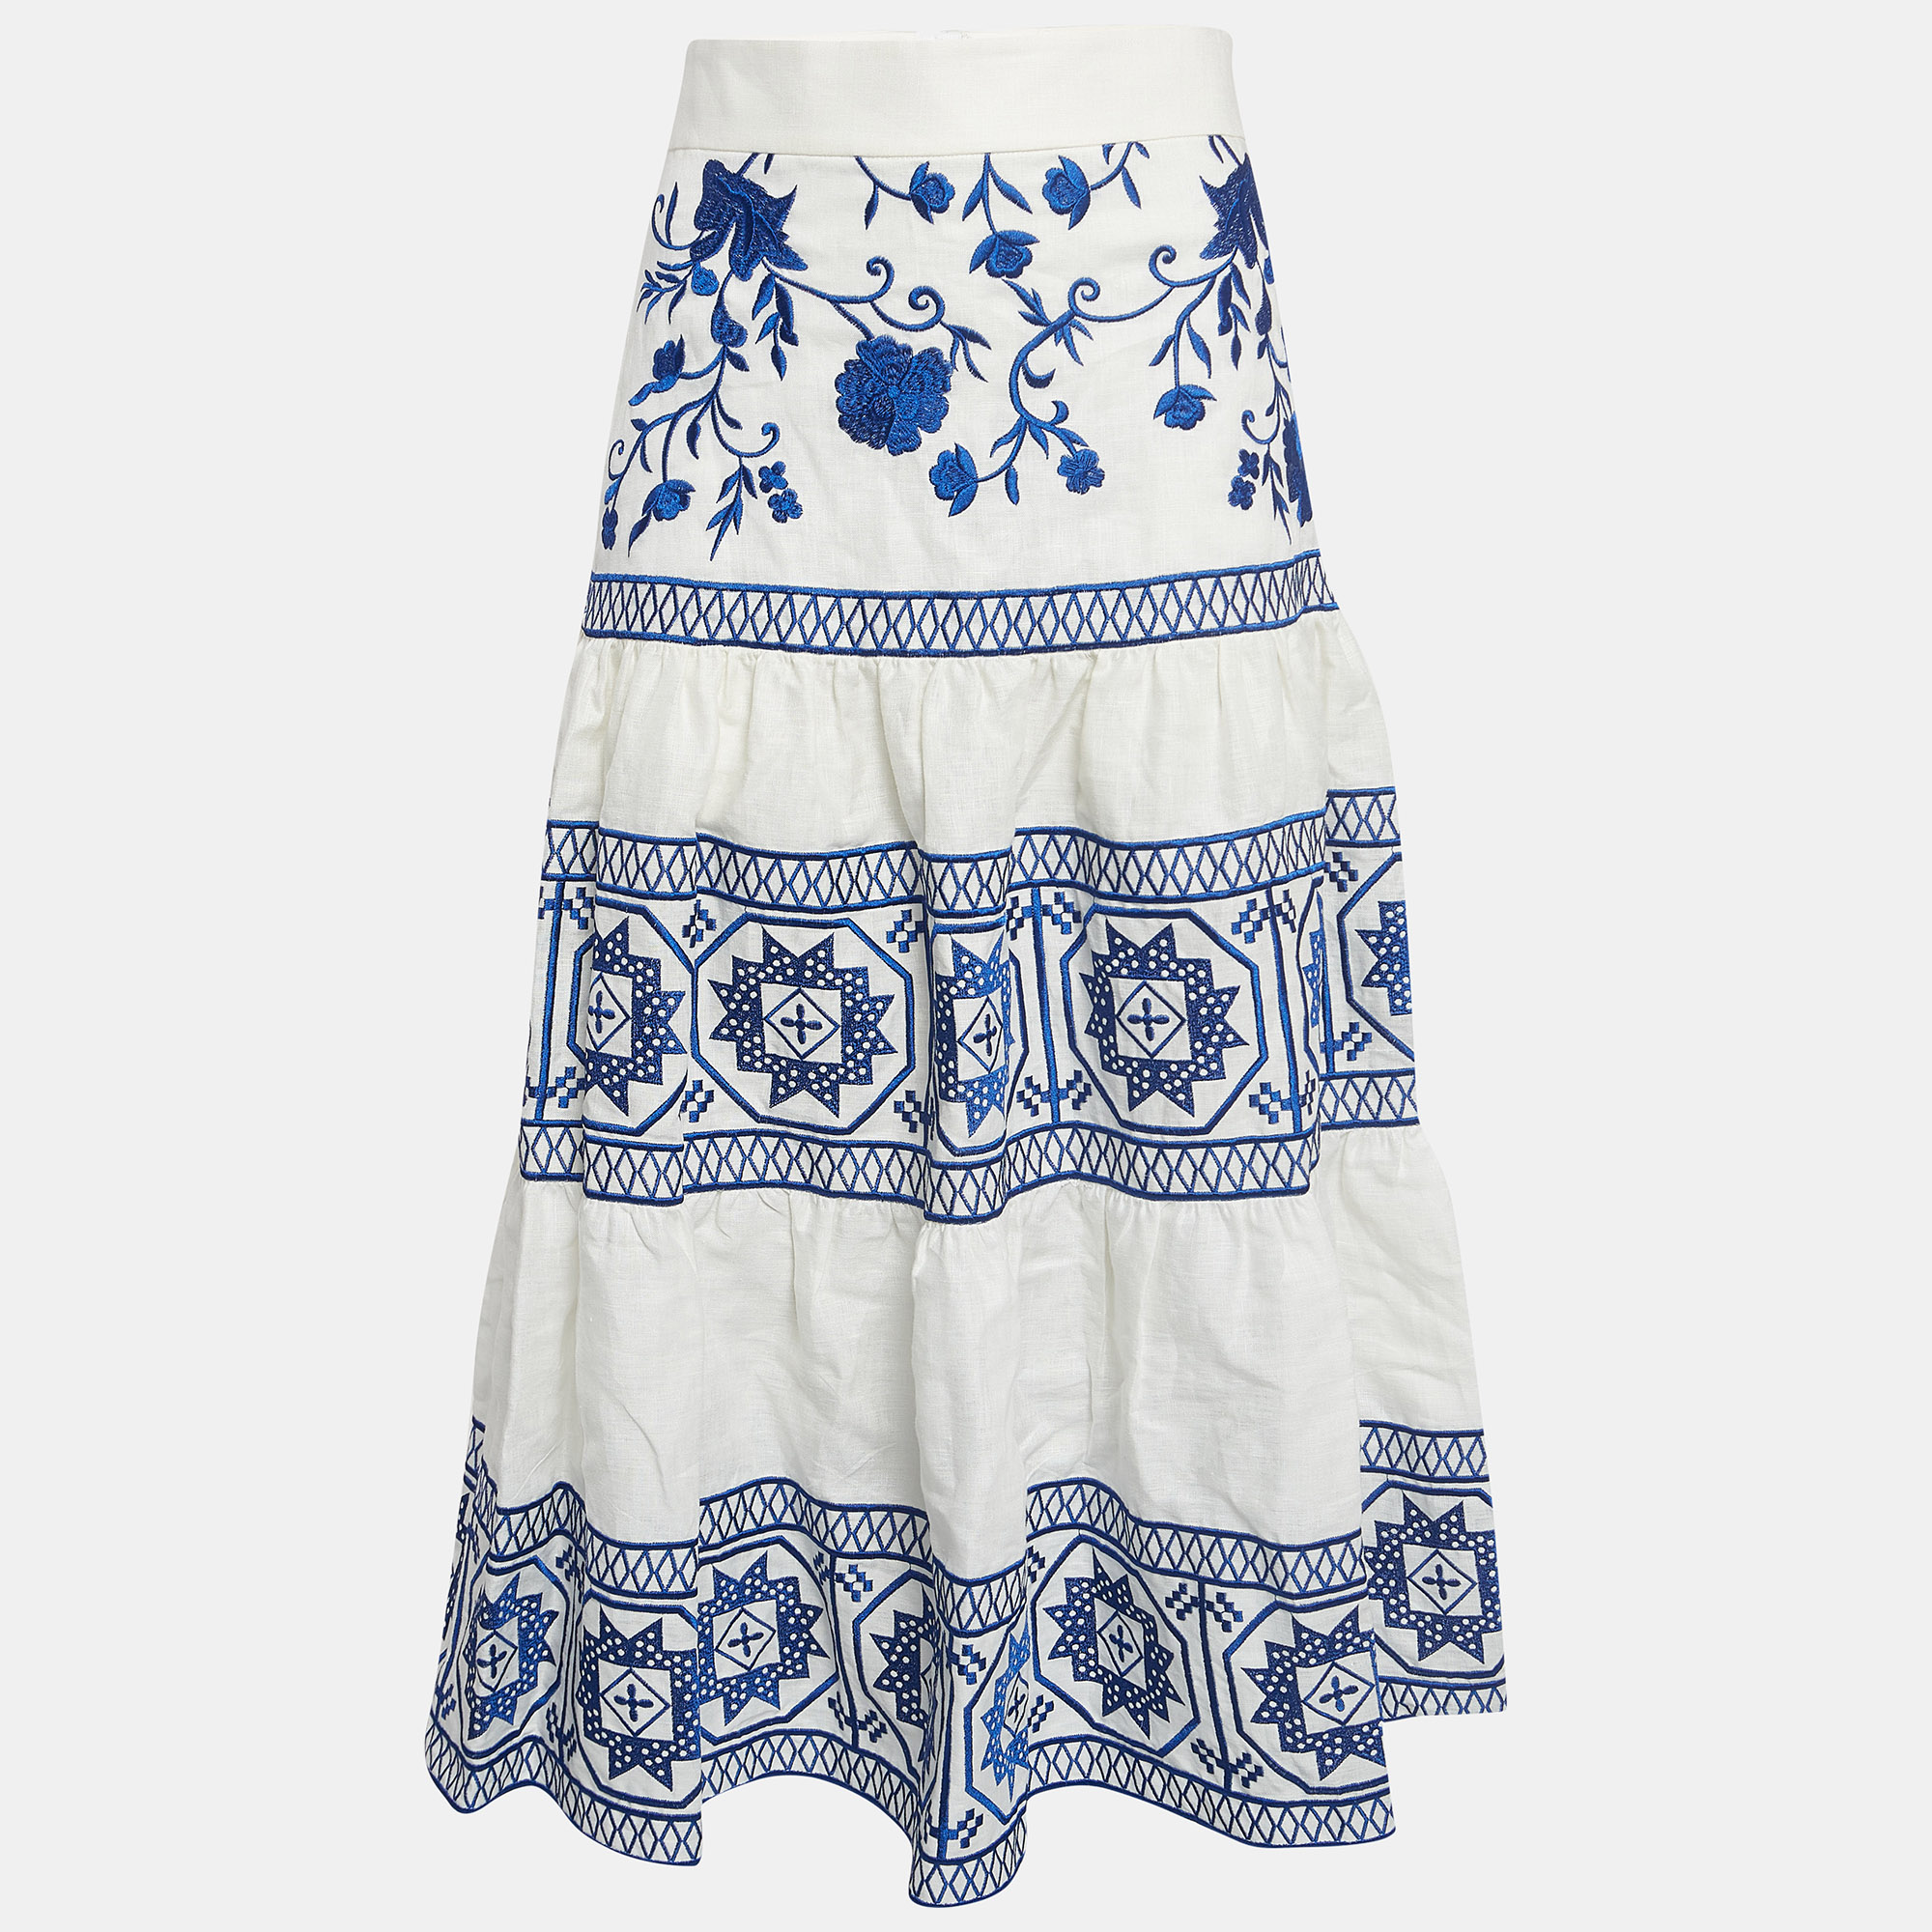 Alexis white/blue embroidered linen midi skirt s